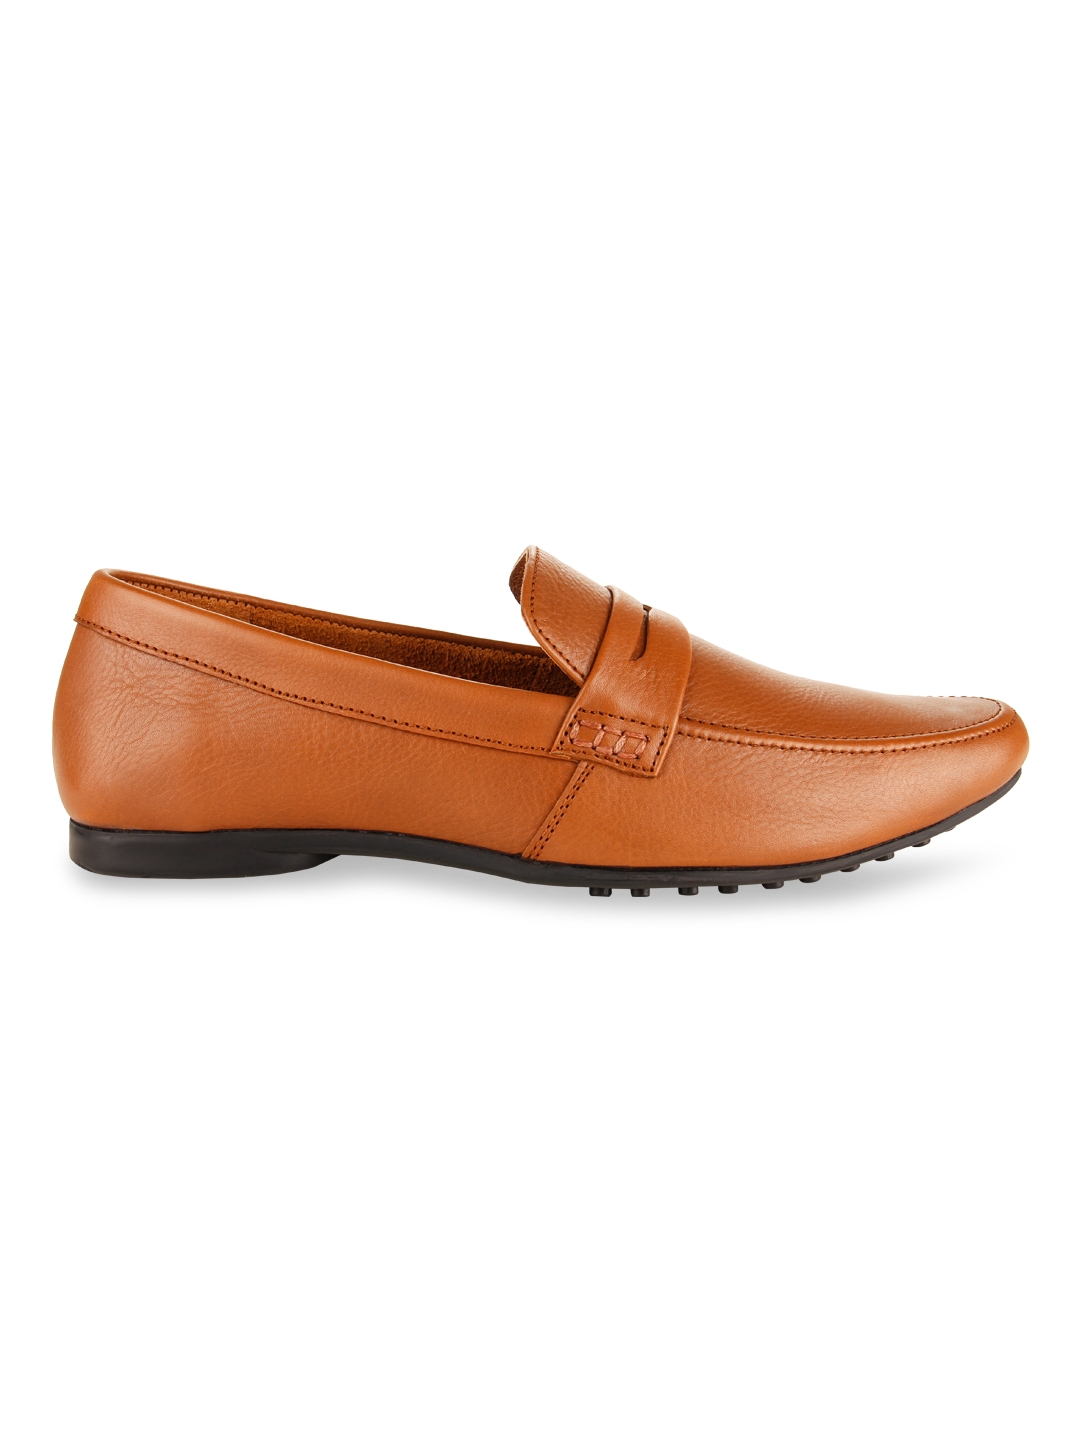 Regal | Regal Tan Men Formal Leather Slip On Shoes